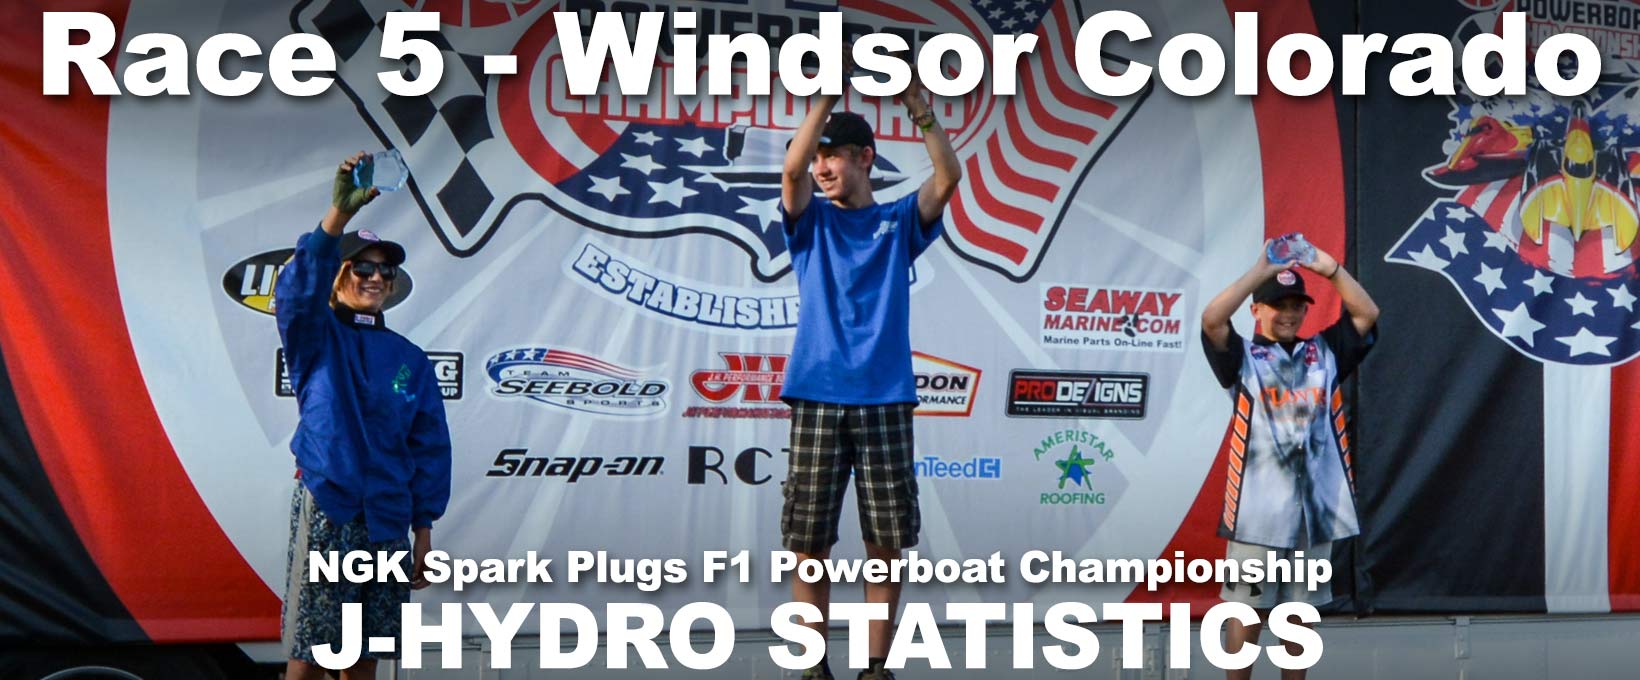 NGK-F1-Powerboat-Championship-Winsdor-Colorado-JHydro-Points